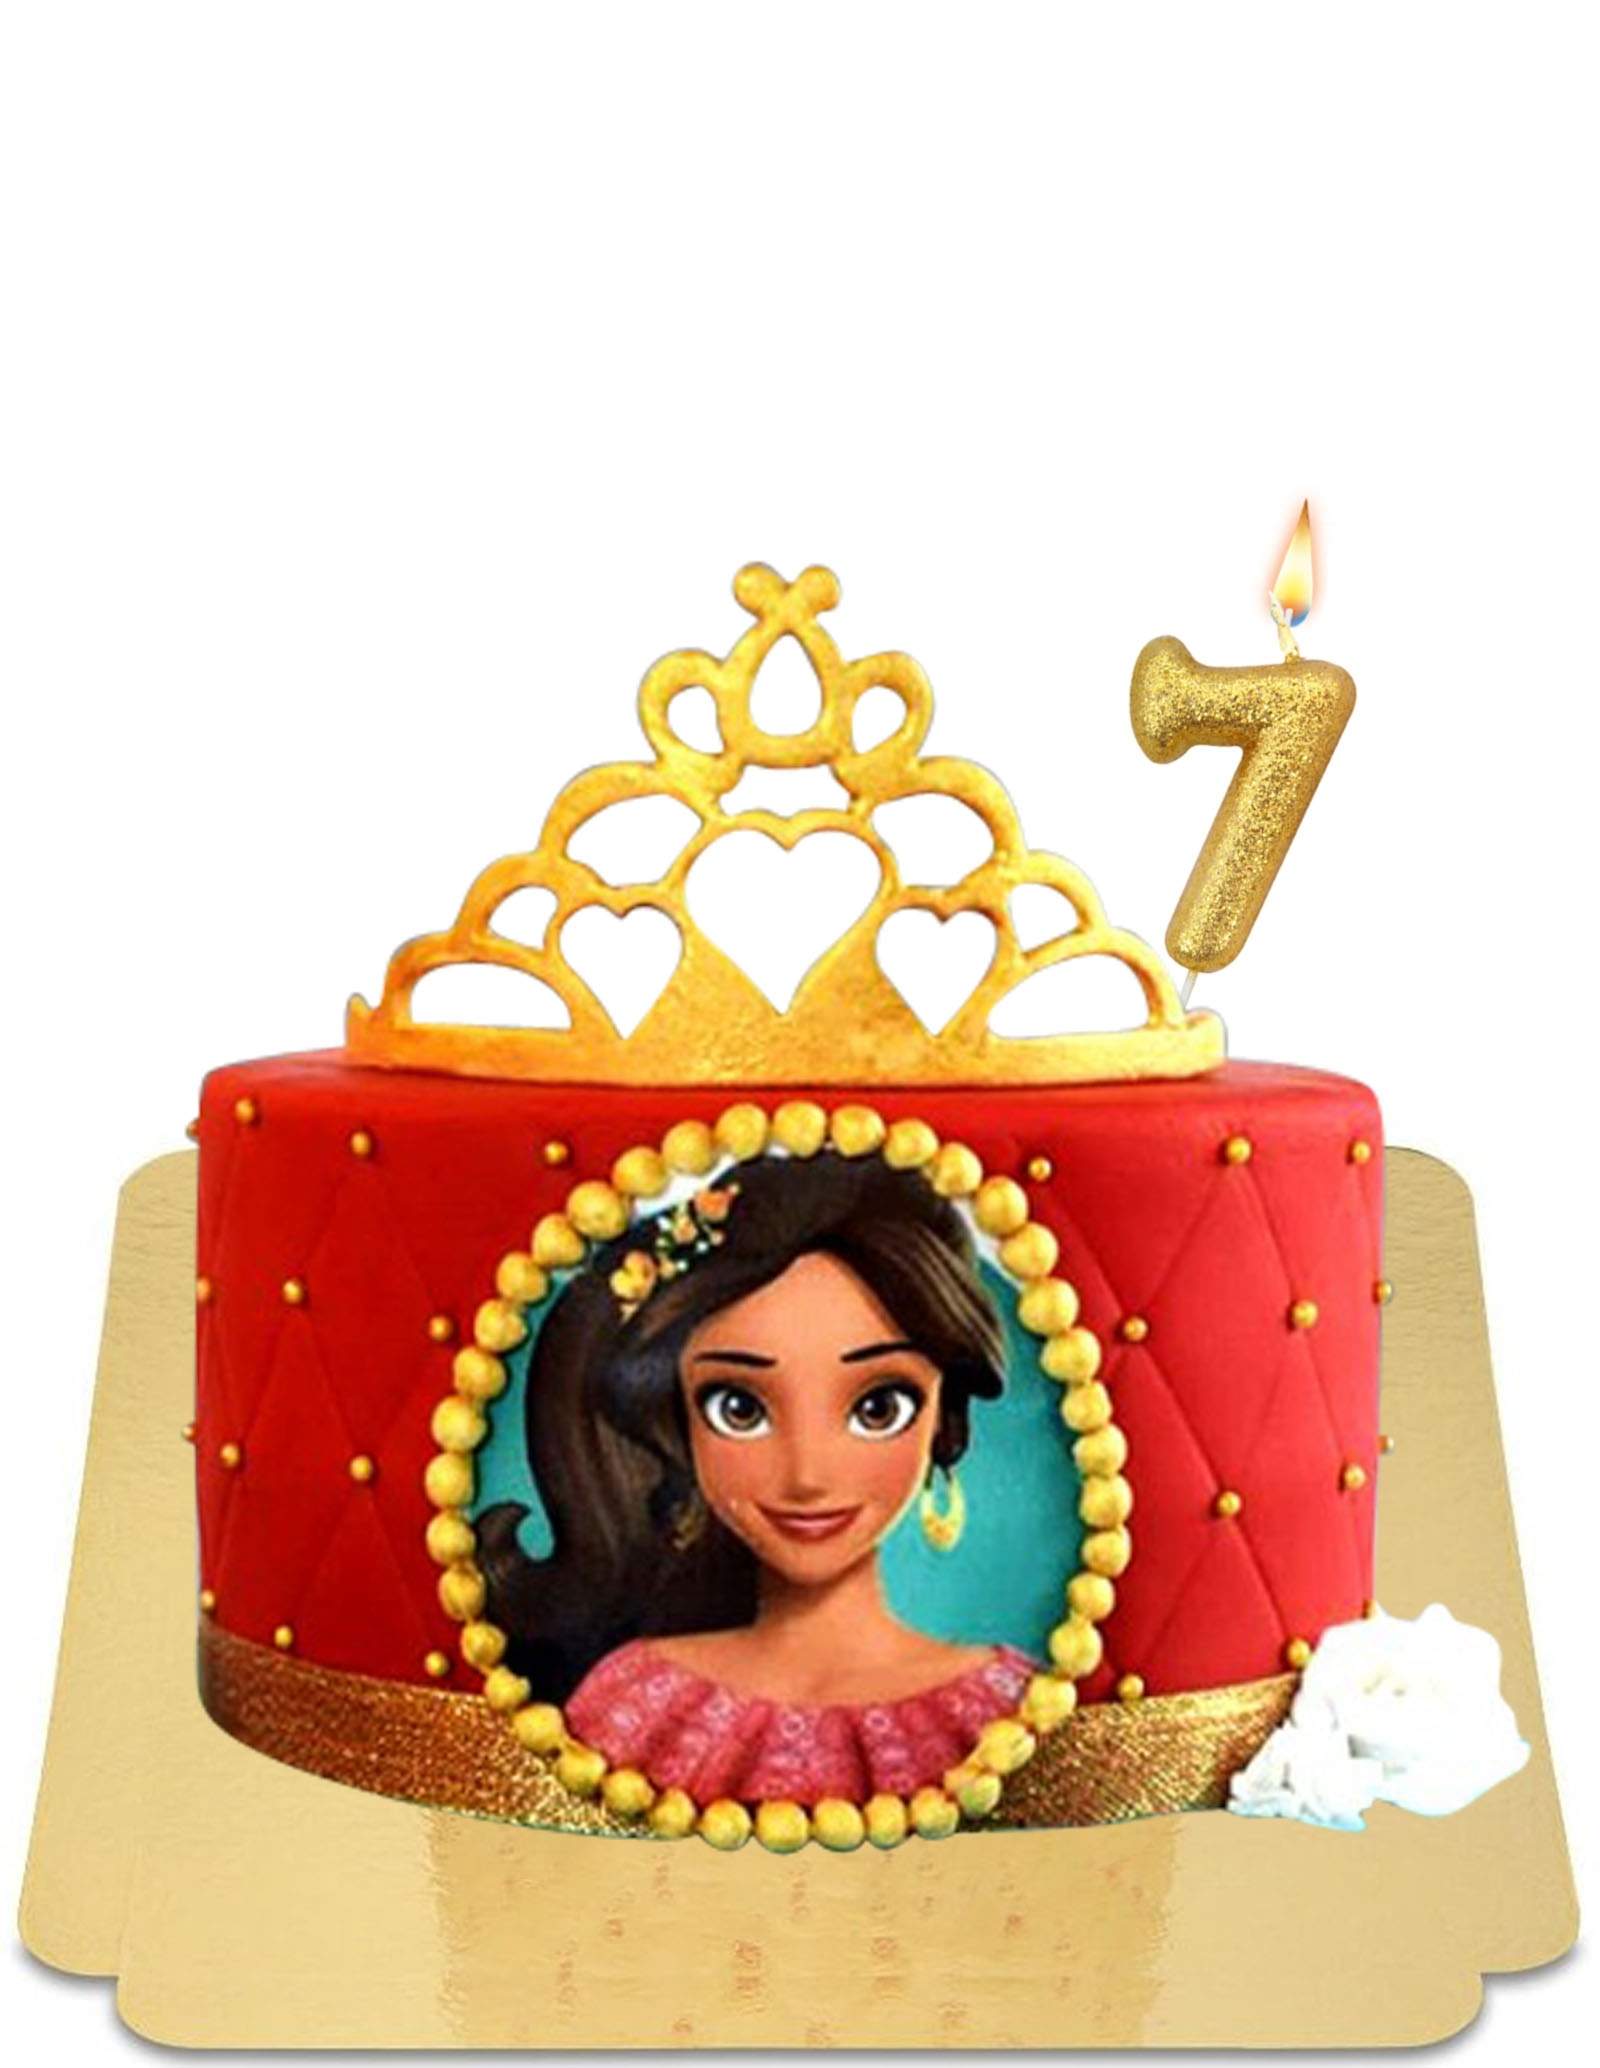 Gâteau Elena princesse Disney vegan, sans gluten